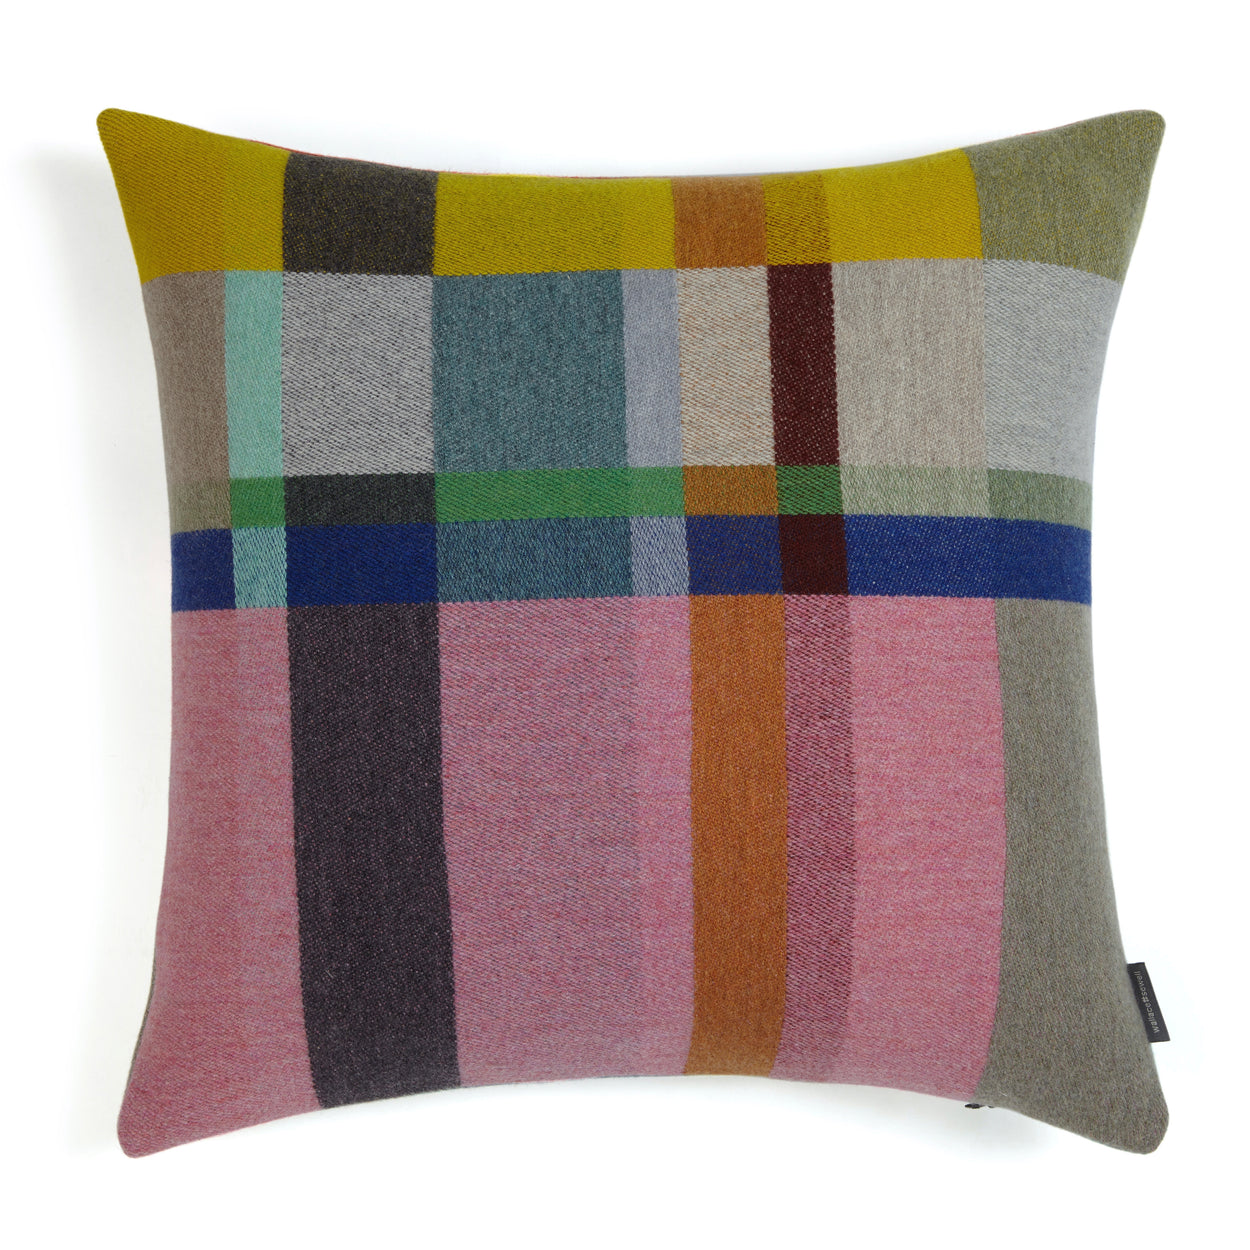 Premium Merino wool cushion cover in Lloyd front.